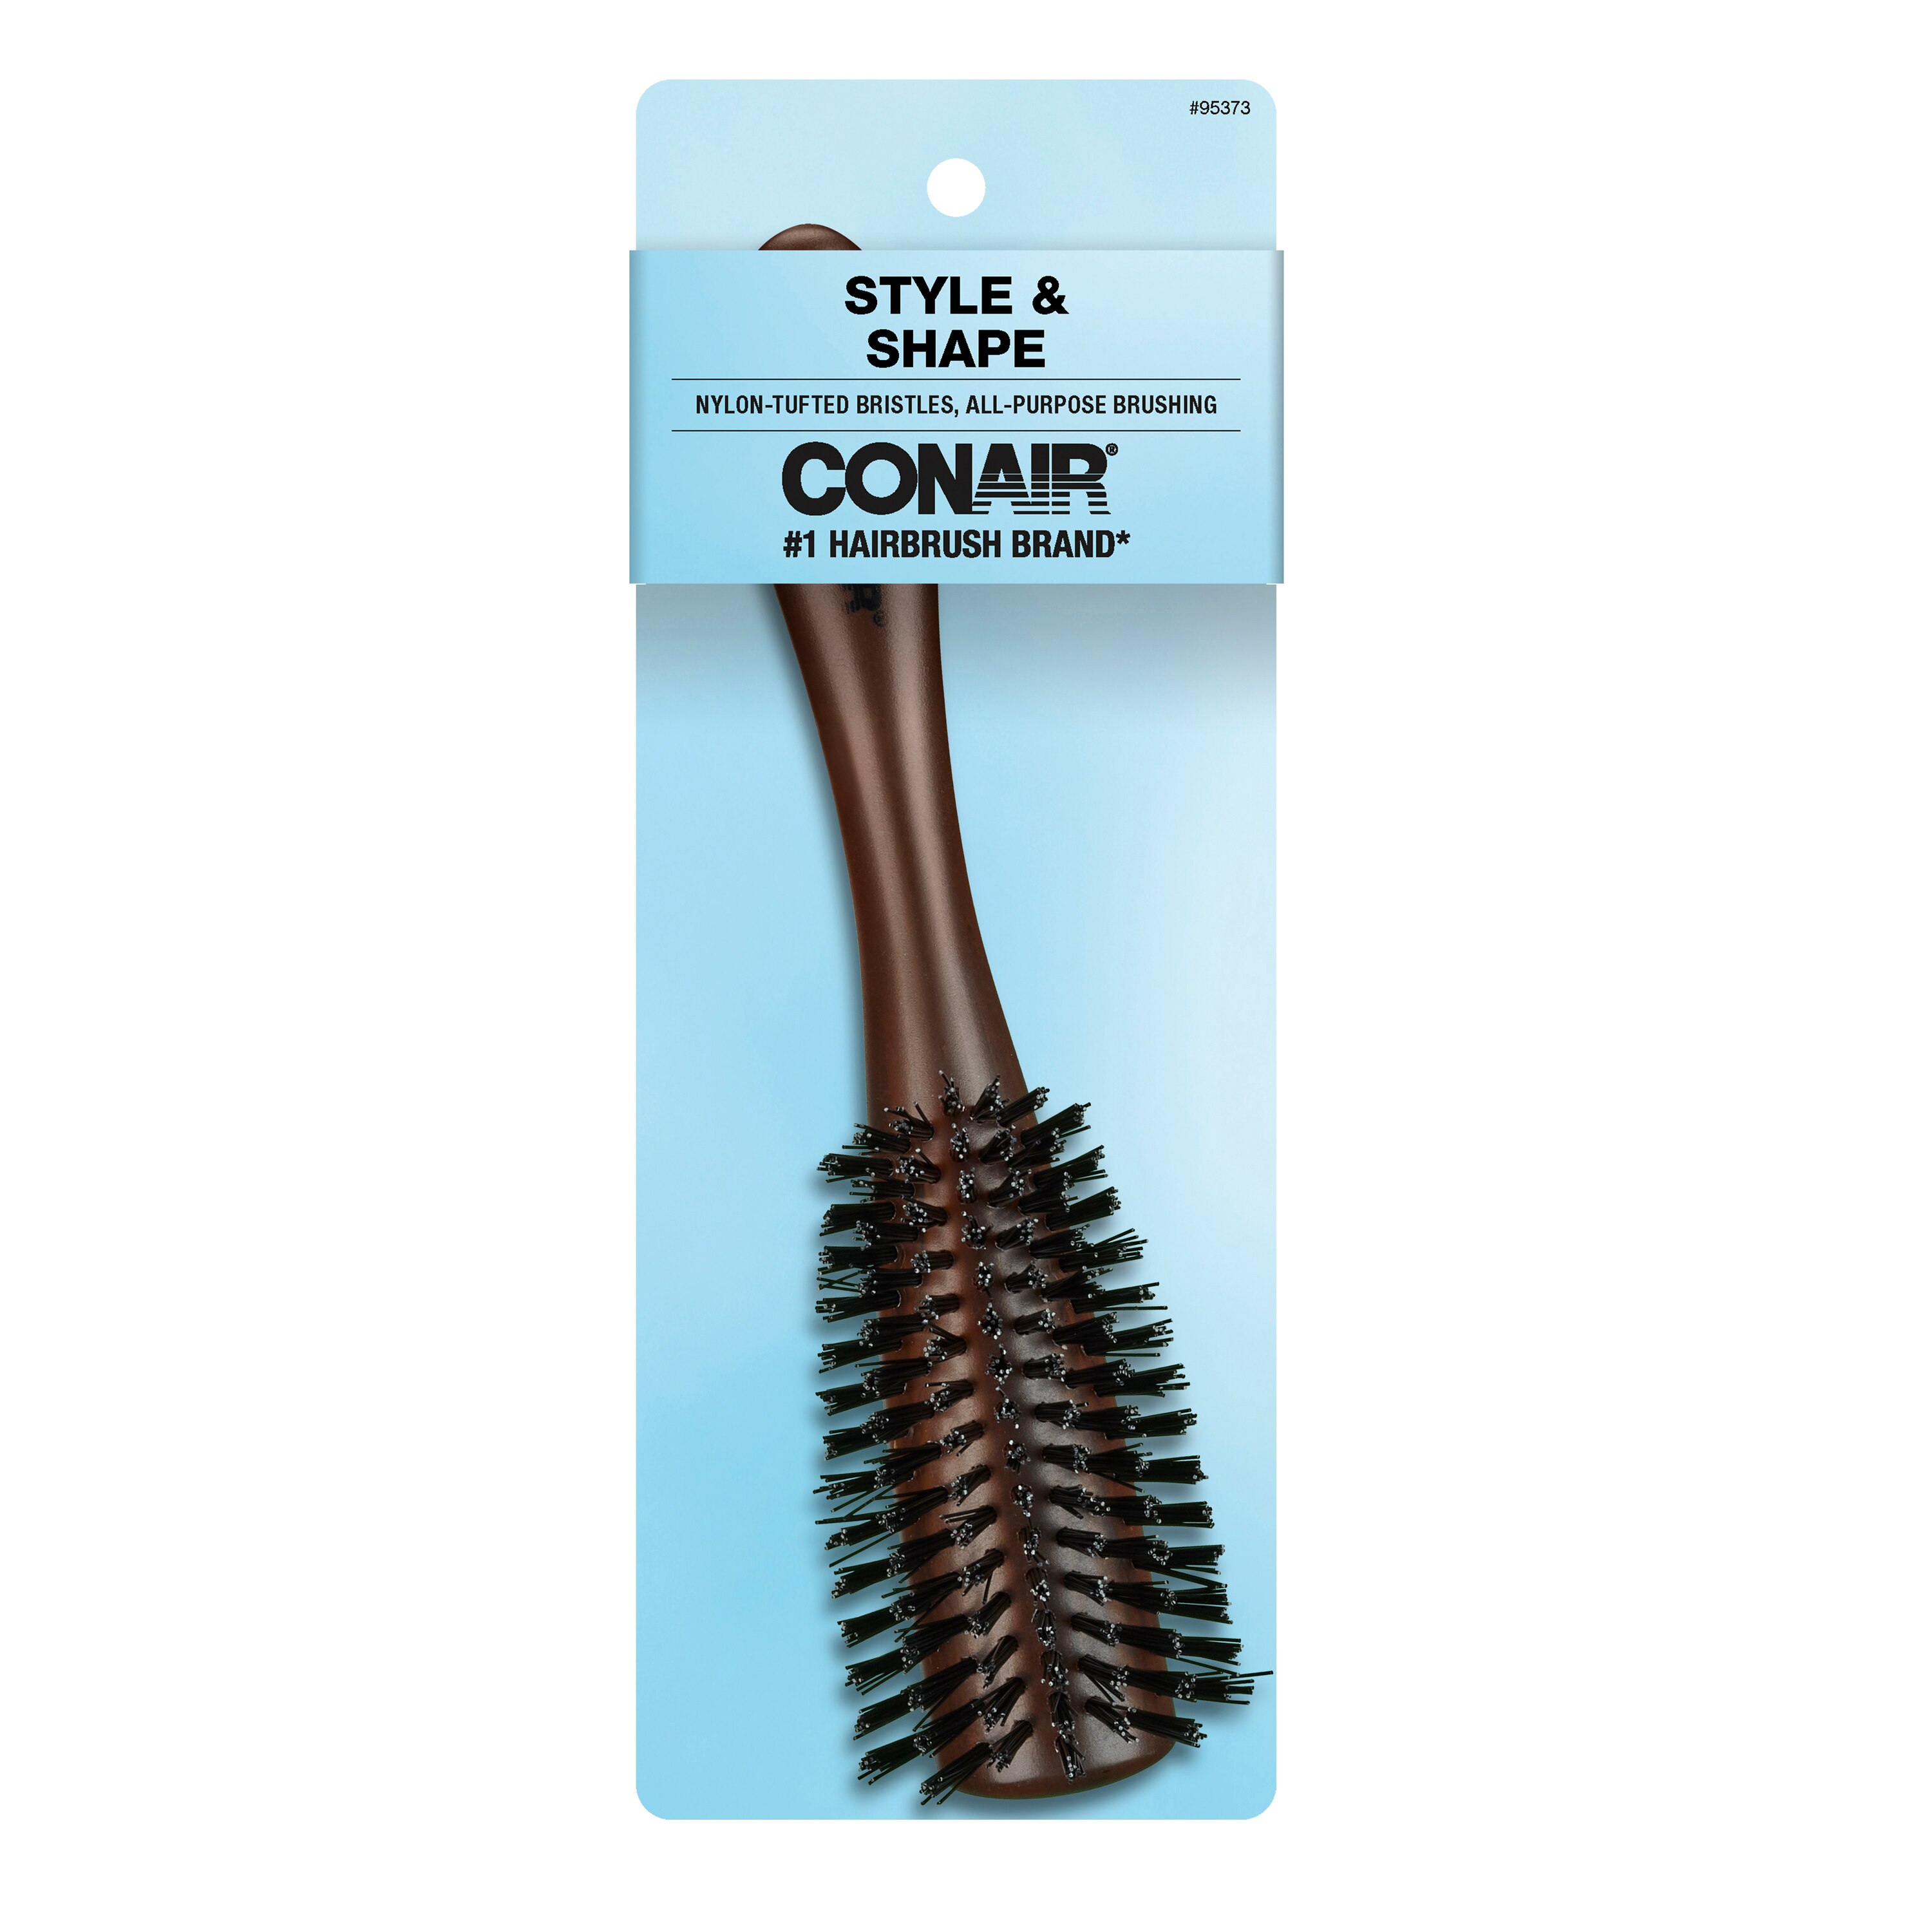 Conair Nylon-Tufted Bristle All-Purpose Hairbrush